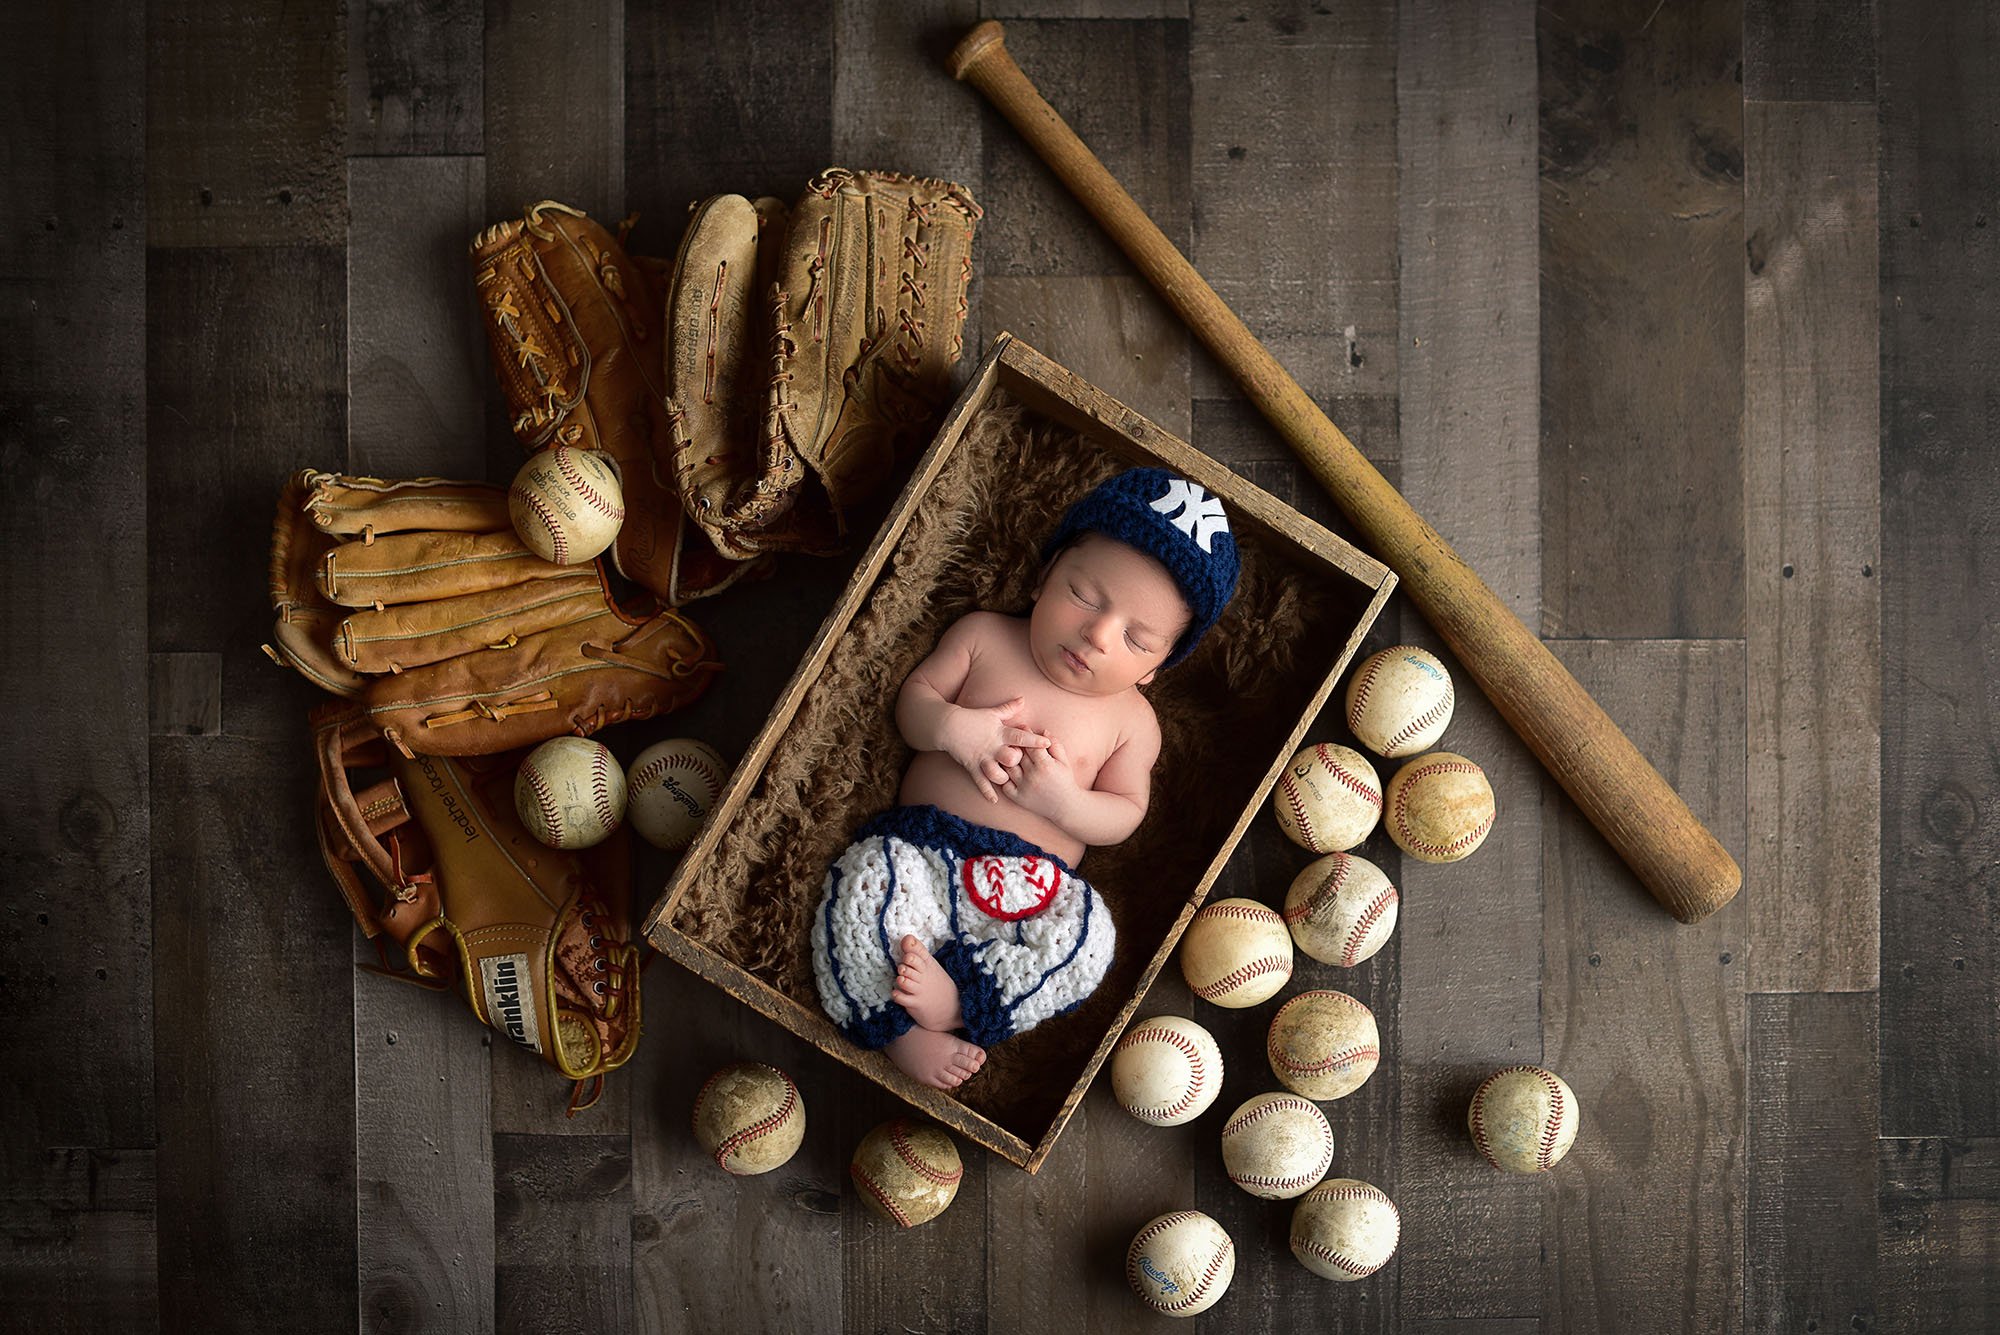 Baseball theme newborn session — Memory Lane Photography